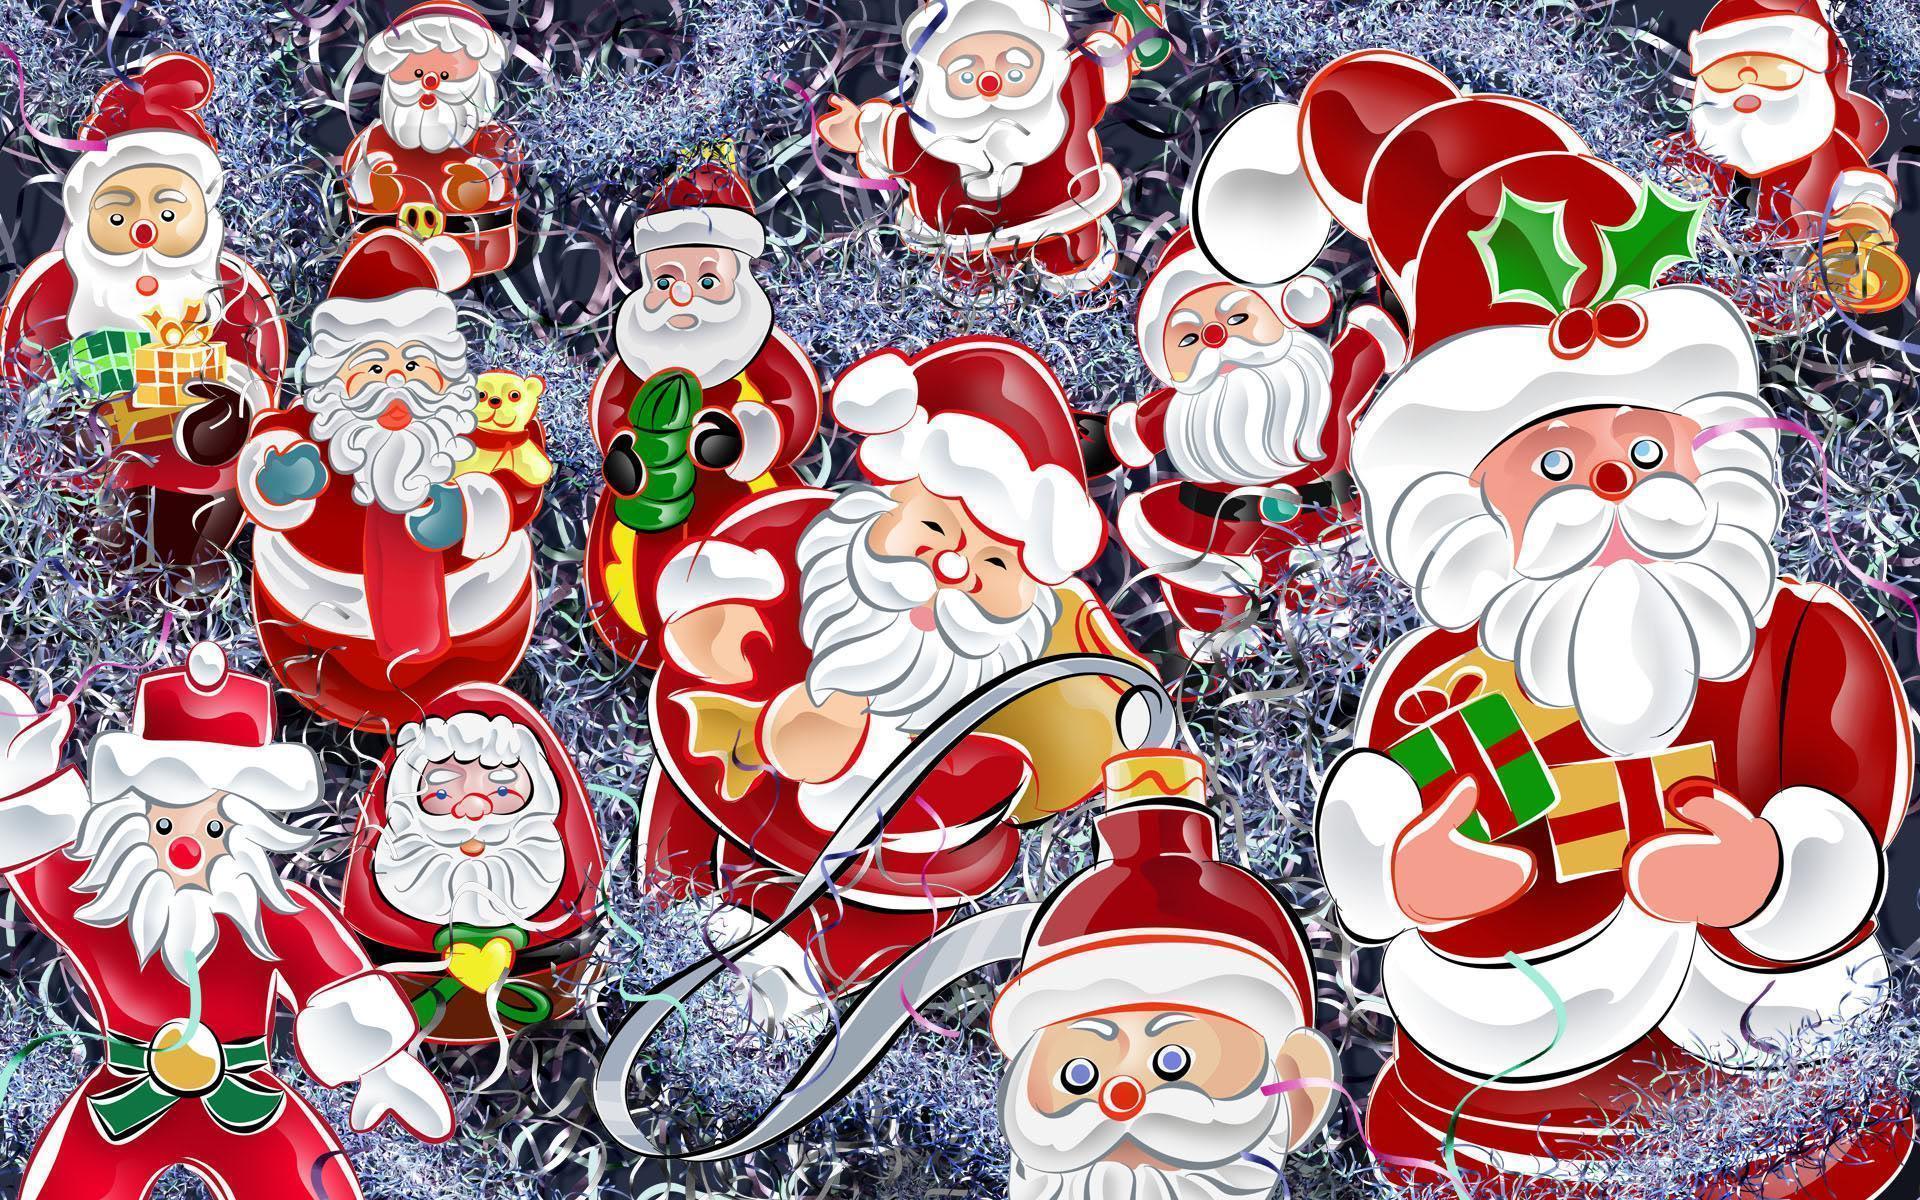 Cute Santa Claus dolls free desktop background wallpaper image